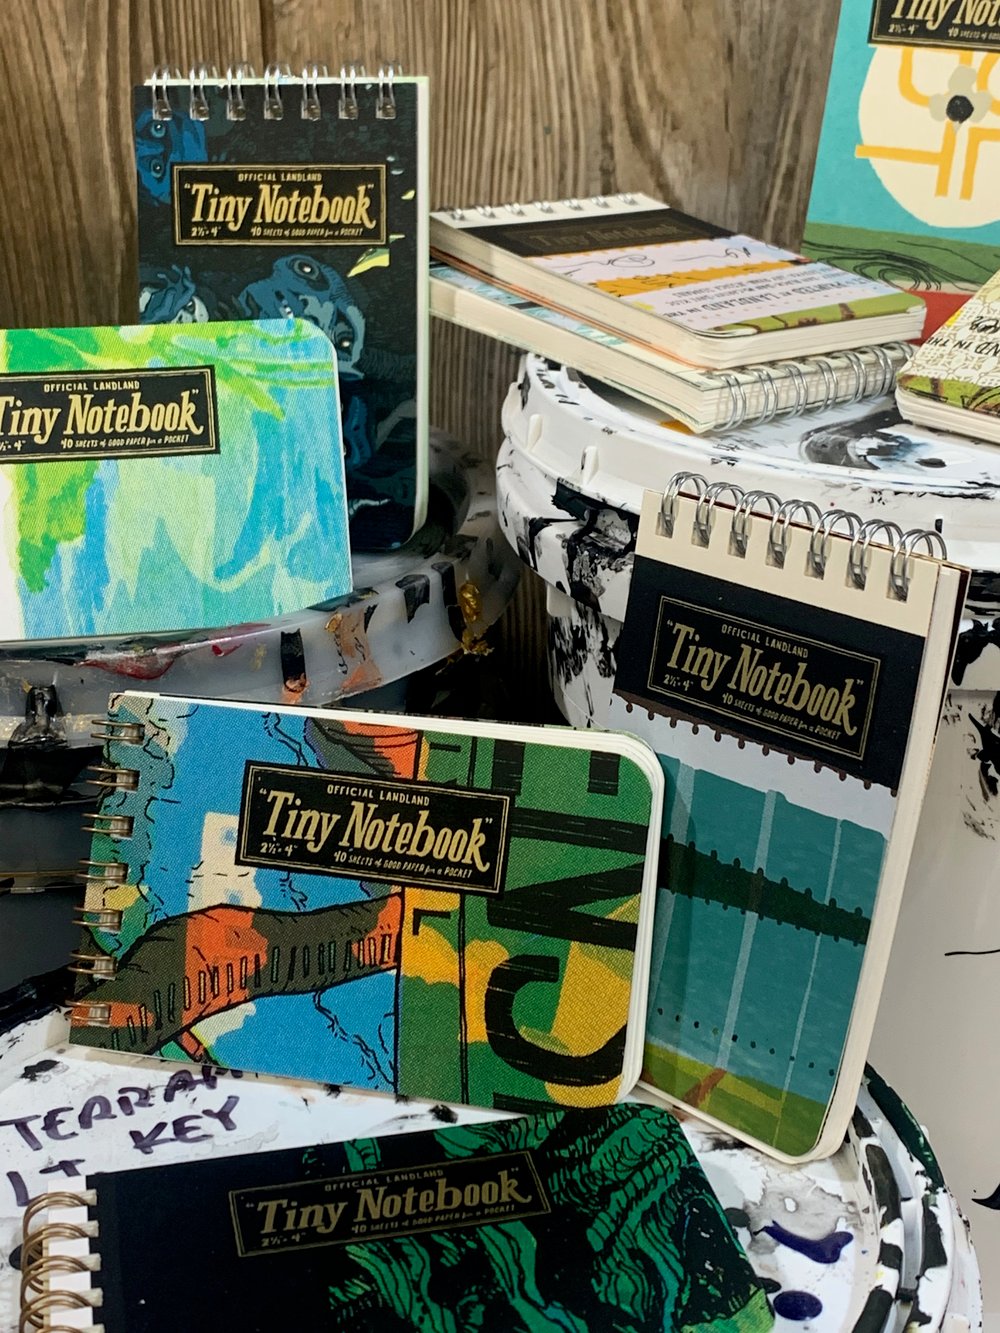 The Official Landland TINY Notebooks!